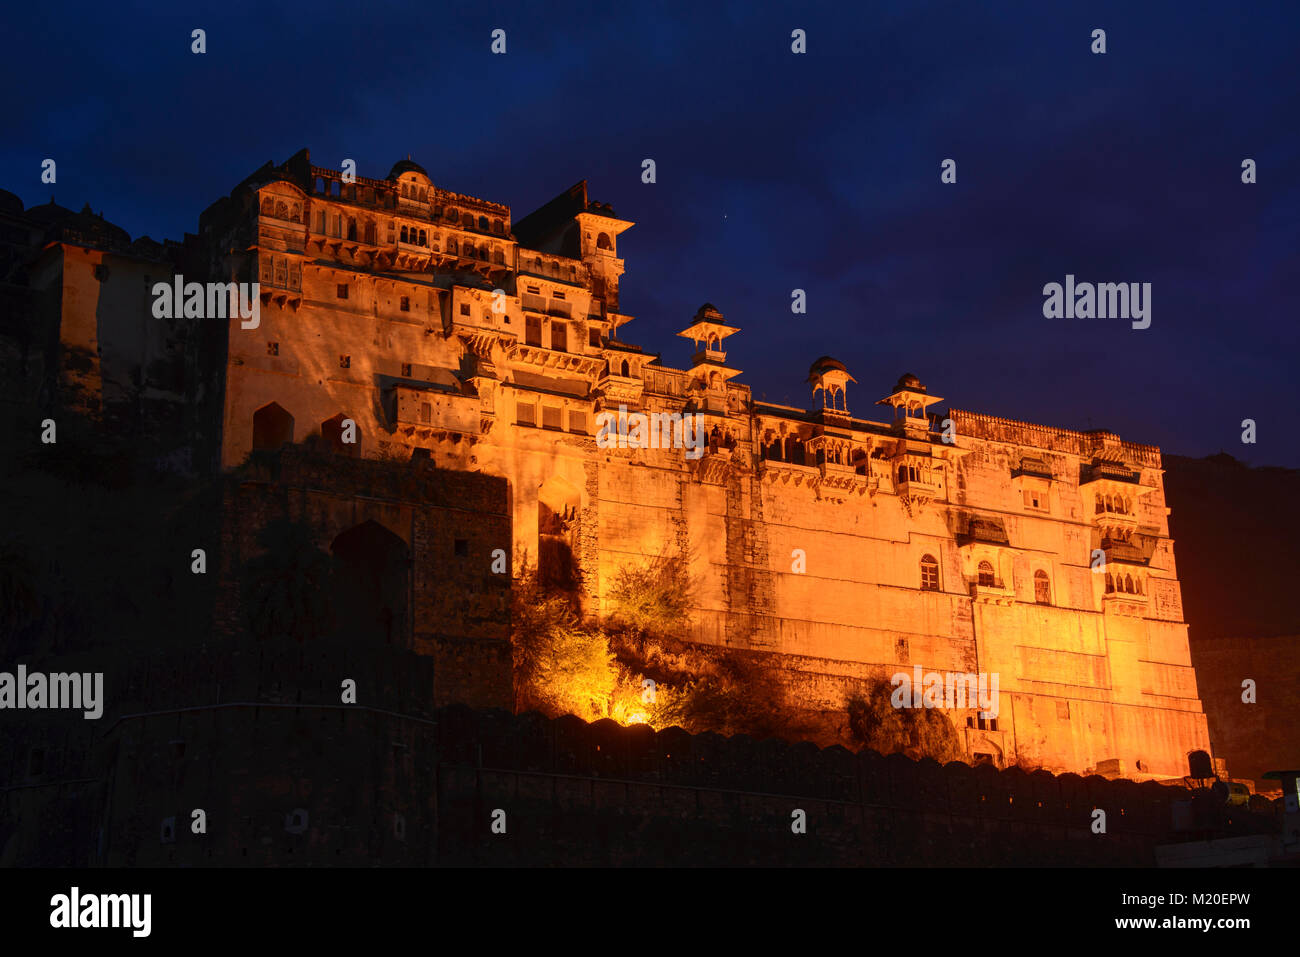 Blue hour shot of the ruined Bundi Palace and Taragarh Fort at night, Rajasthan, India Stock Photo